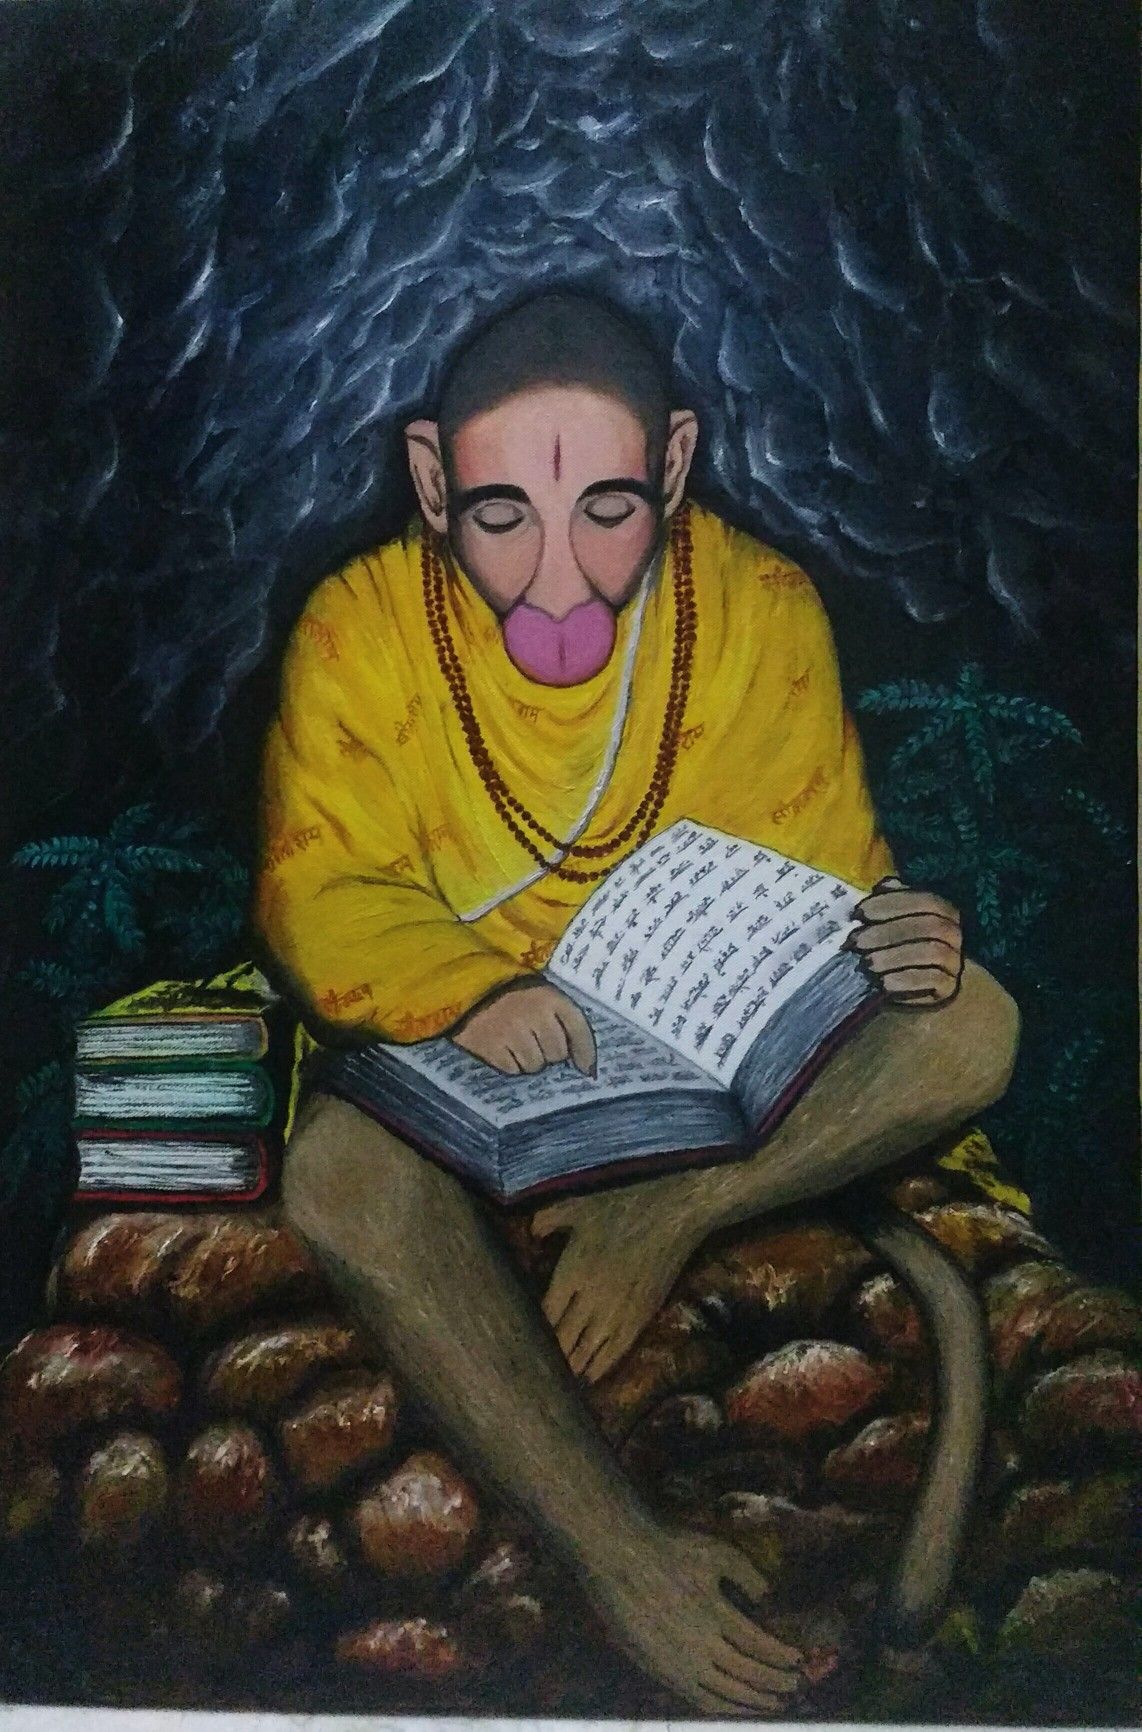 Hanuman ji real pic. Oil painting by Artist Atul sharma.